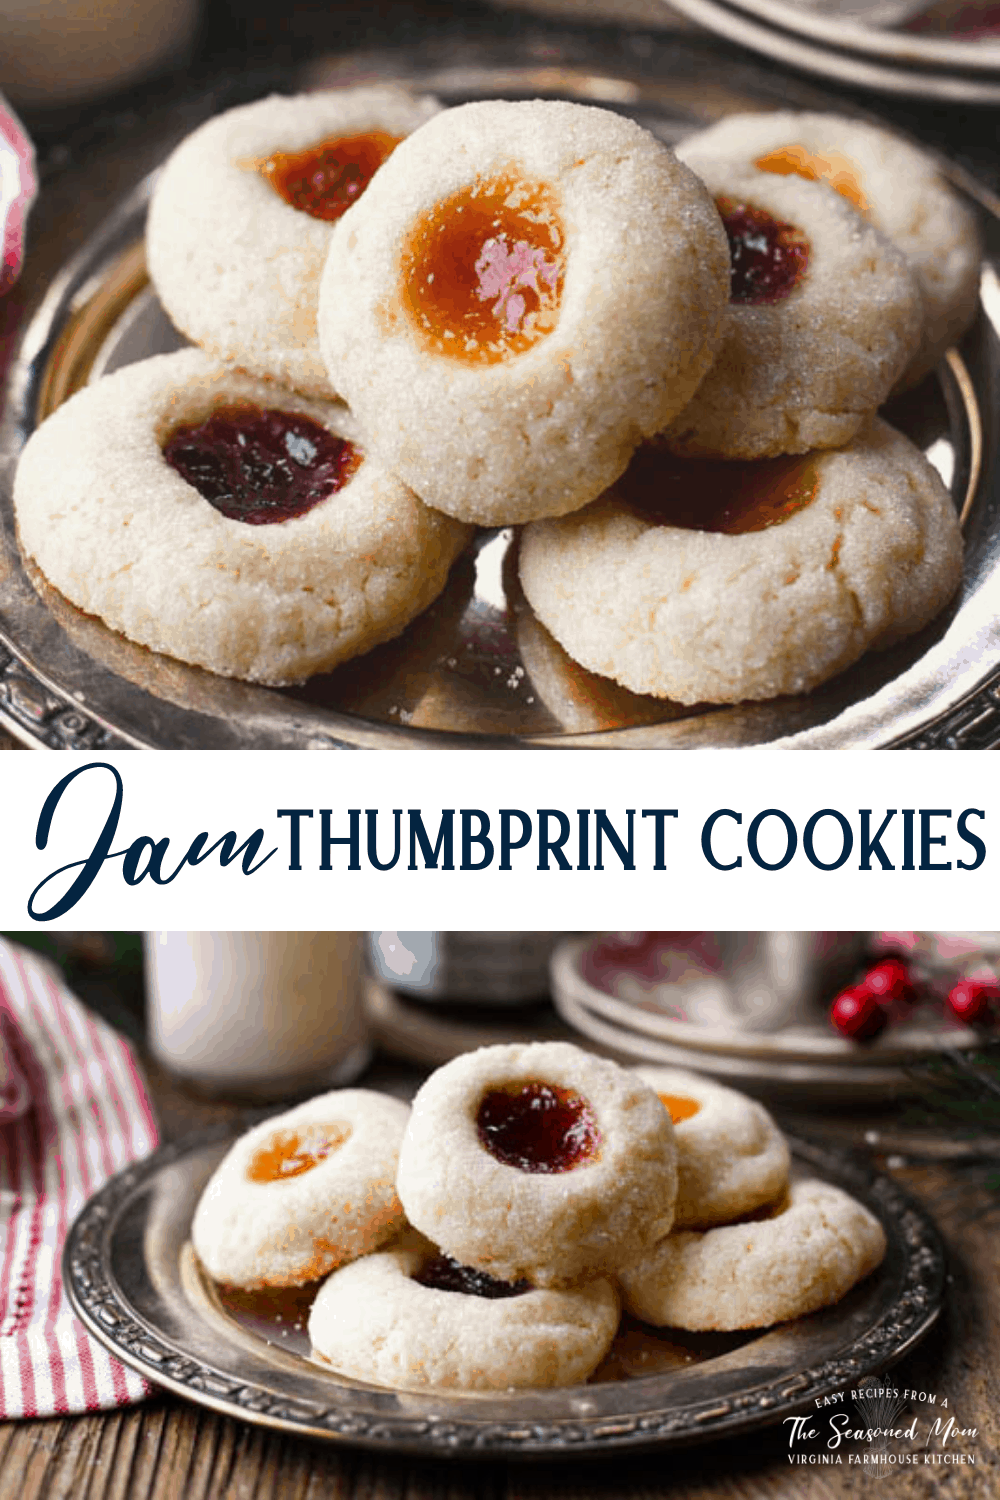 Thumbprint Cookies - The Seasoned Mom